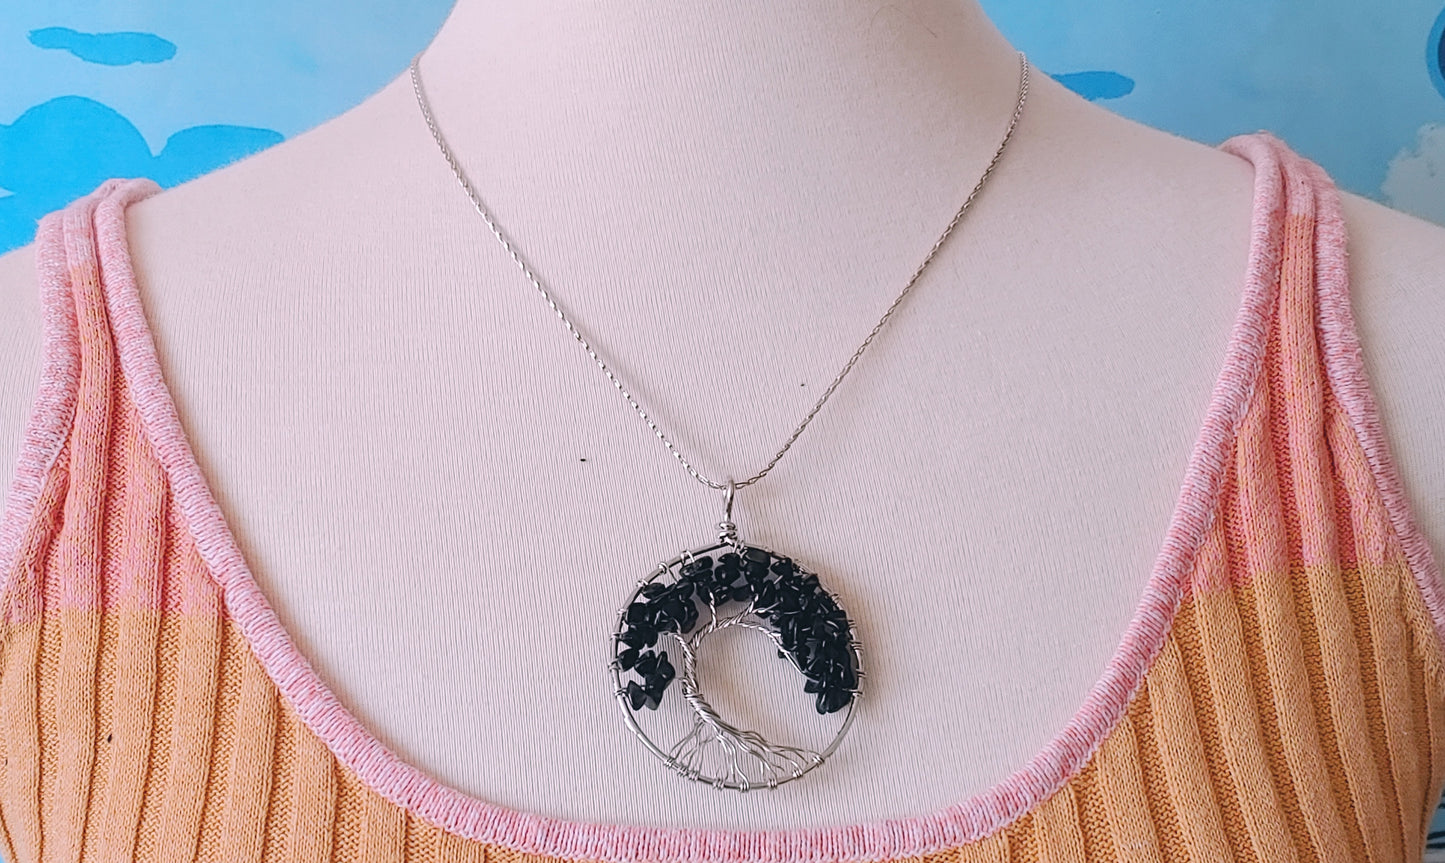 Tree of life pendant necklace with black onyx stones